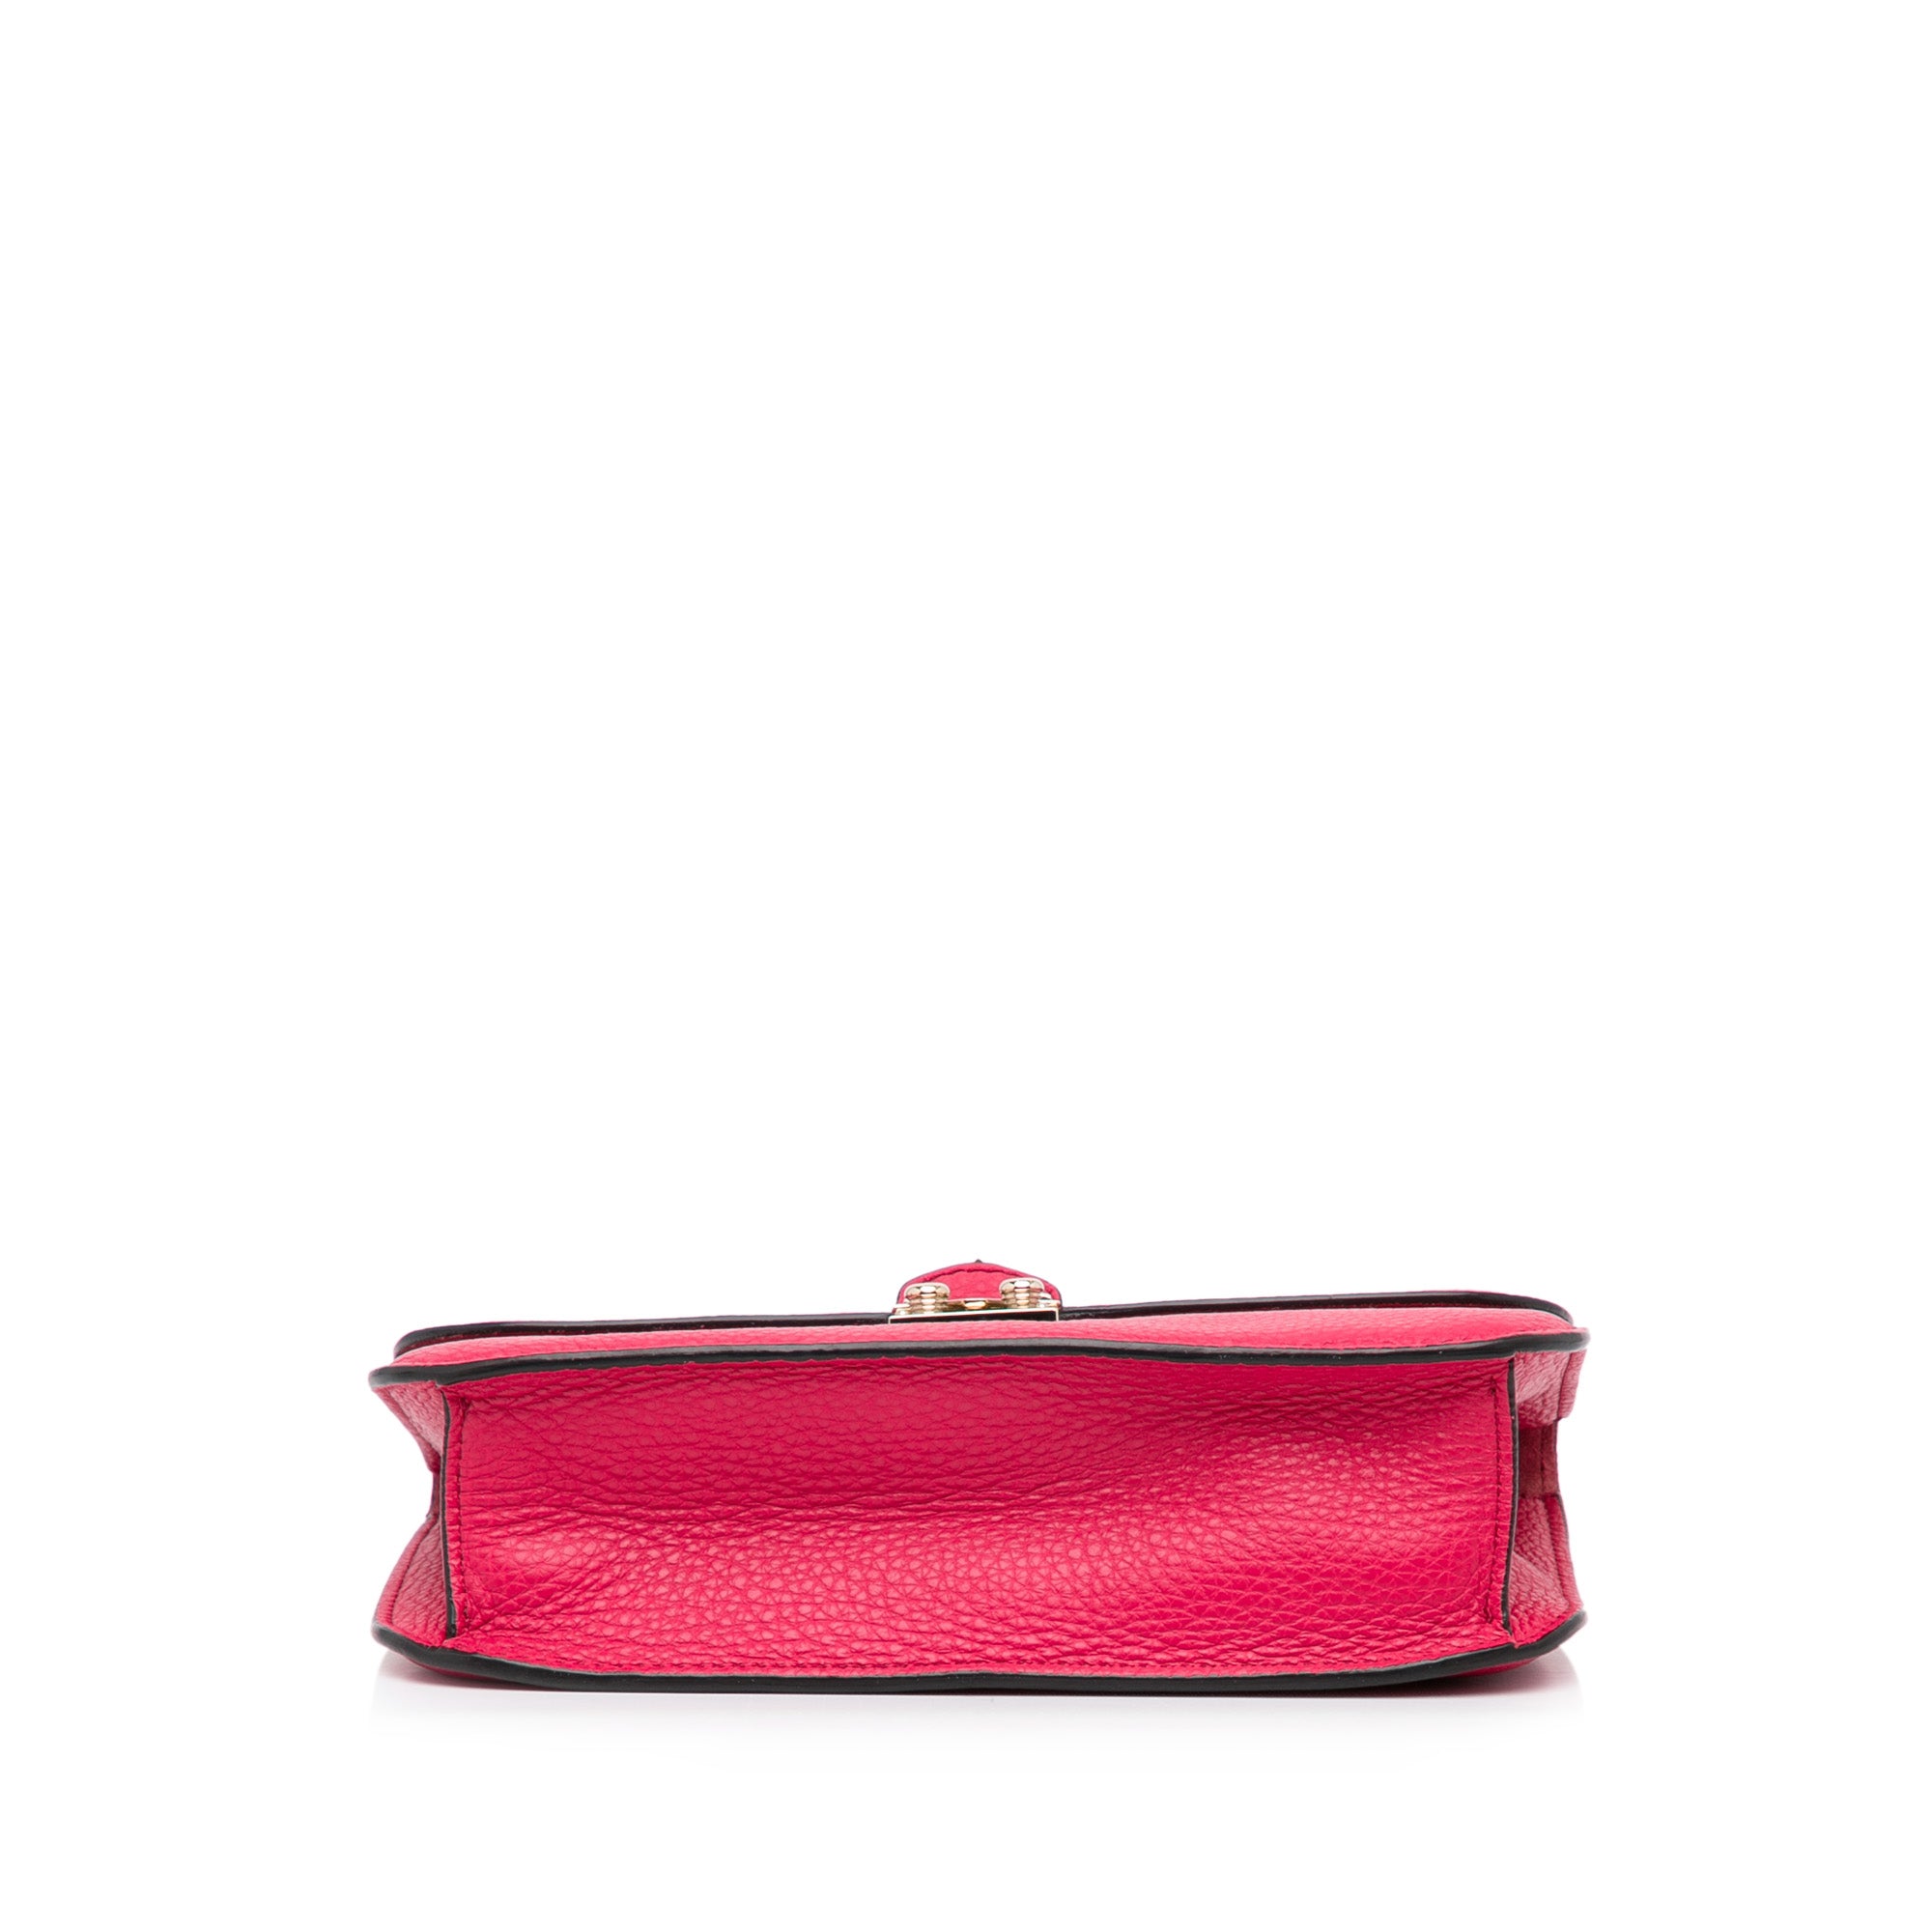 Valentino Garavani Rockstud Glam Lock Leather Small Shoulder Bag Rosso Red  $2145